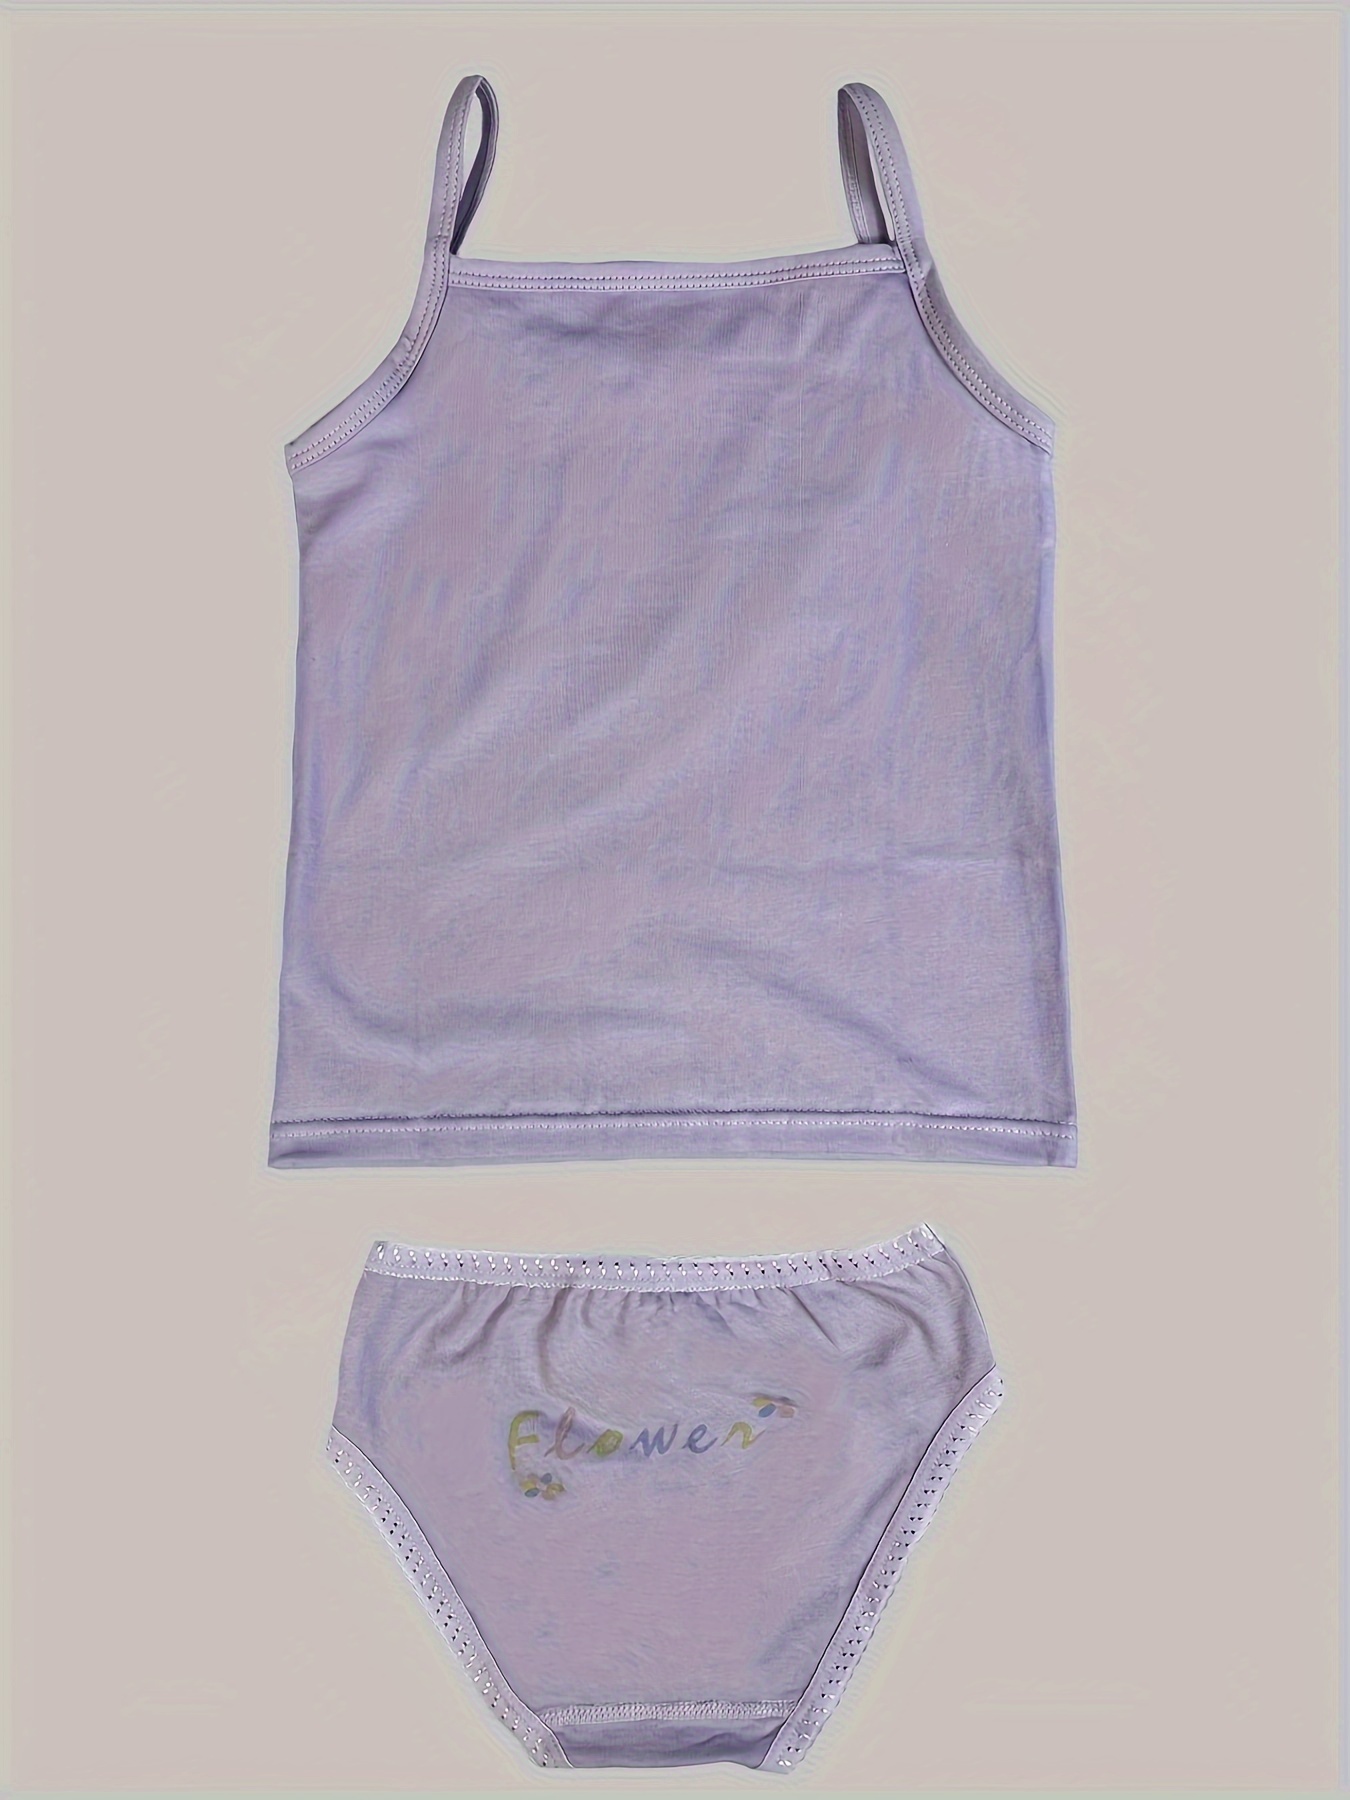 Buy Girls Chemise & Camisoles Online - Innerwear for Kids, 2 PCs Combo  Pack